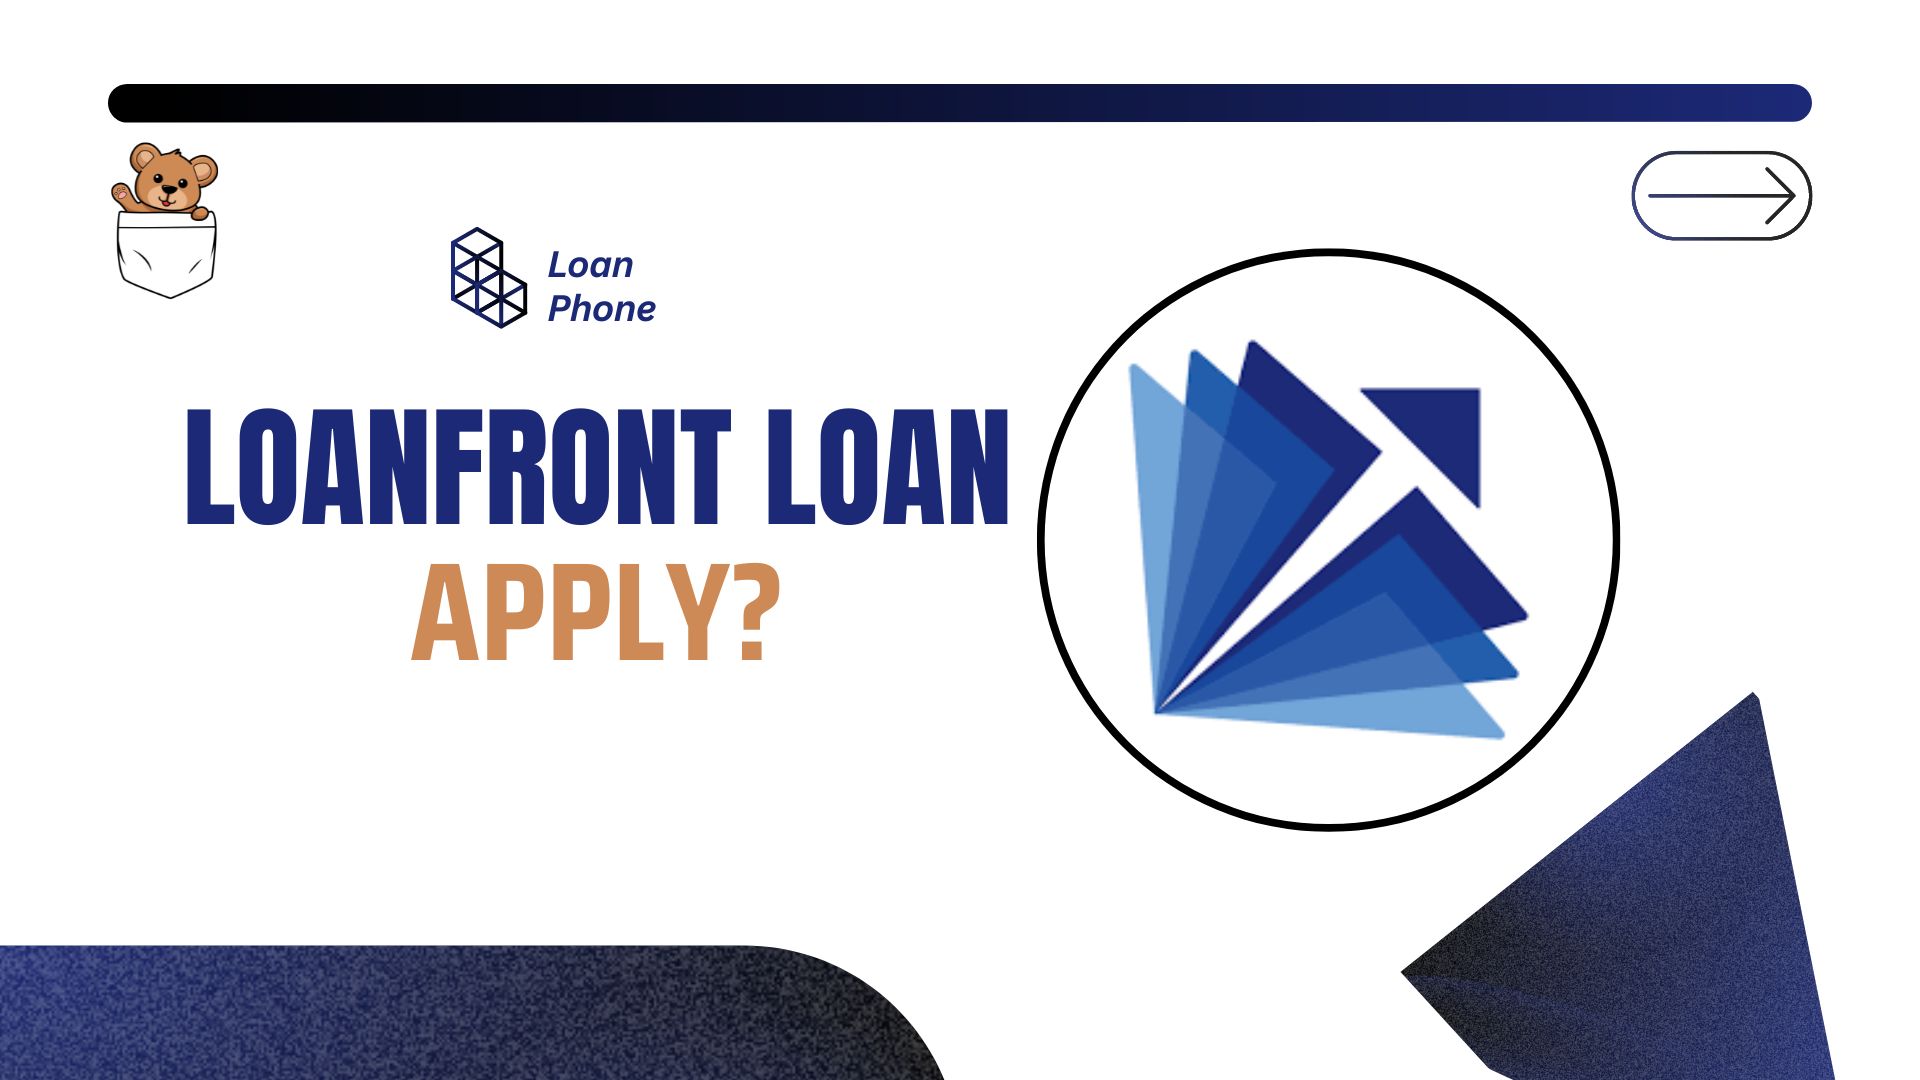 LoanFront Loan App से लोन कैसे लें?